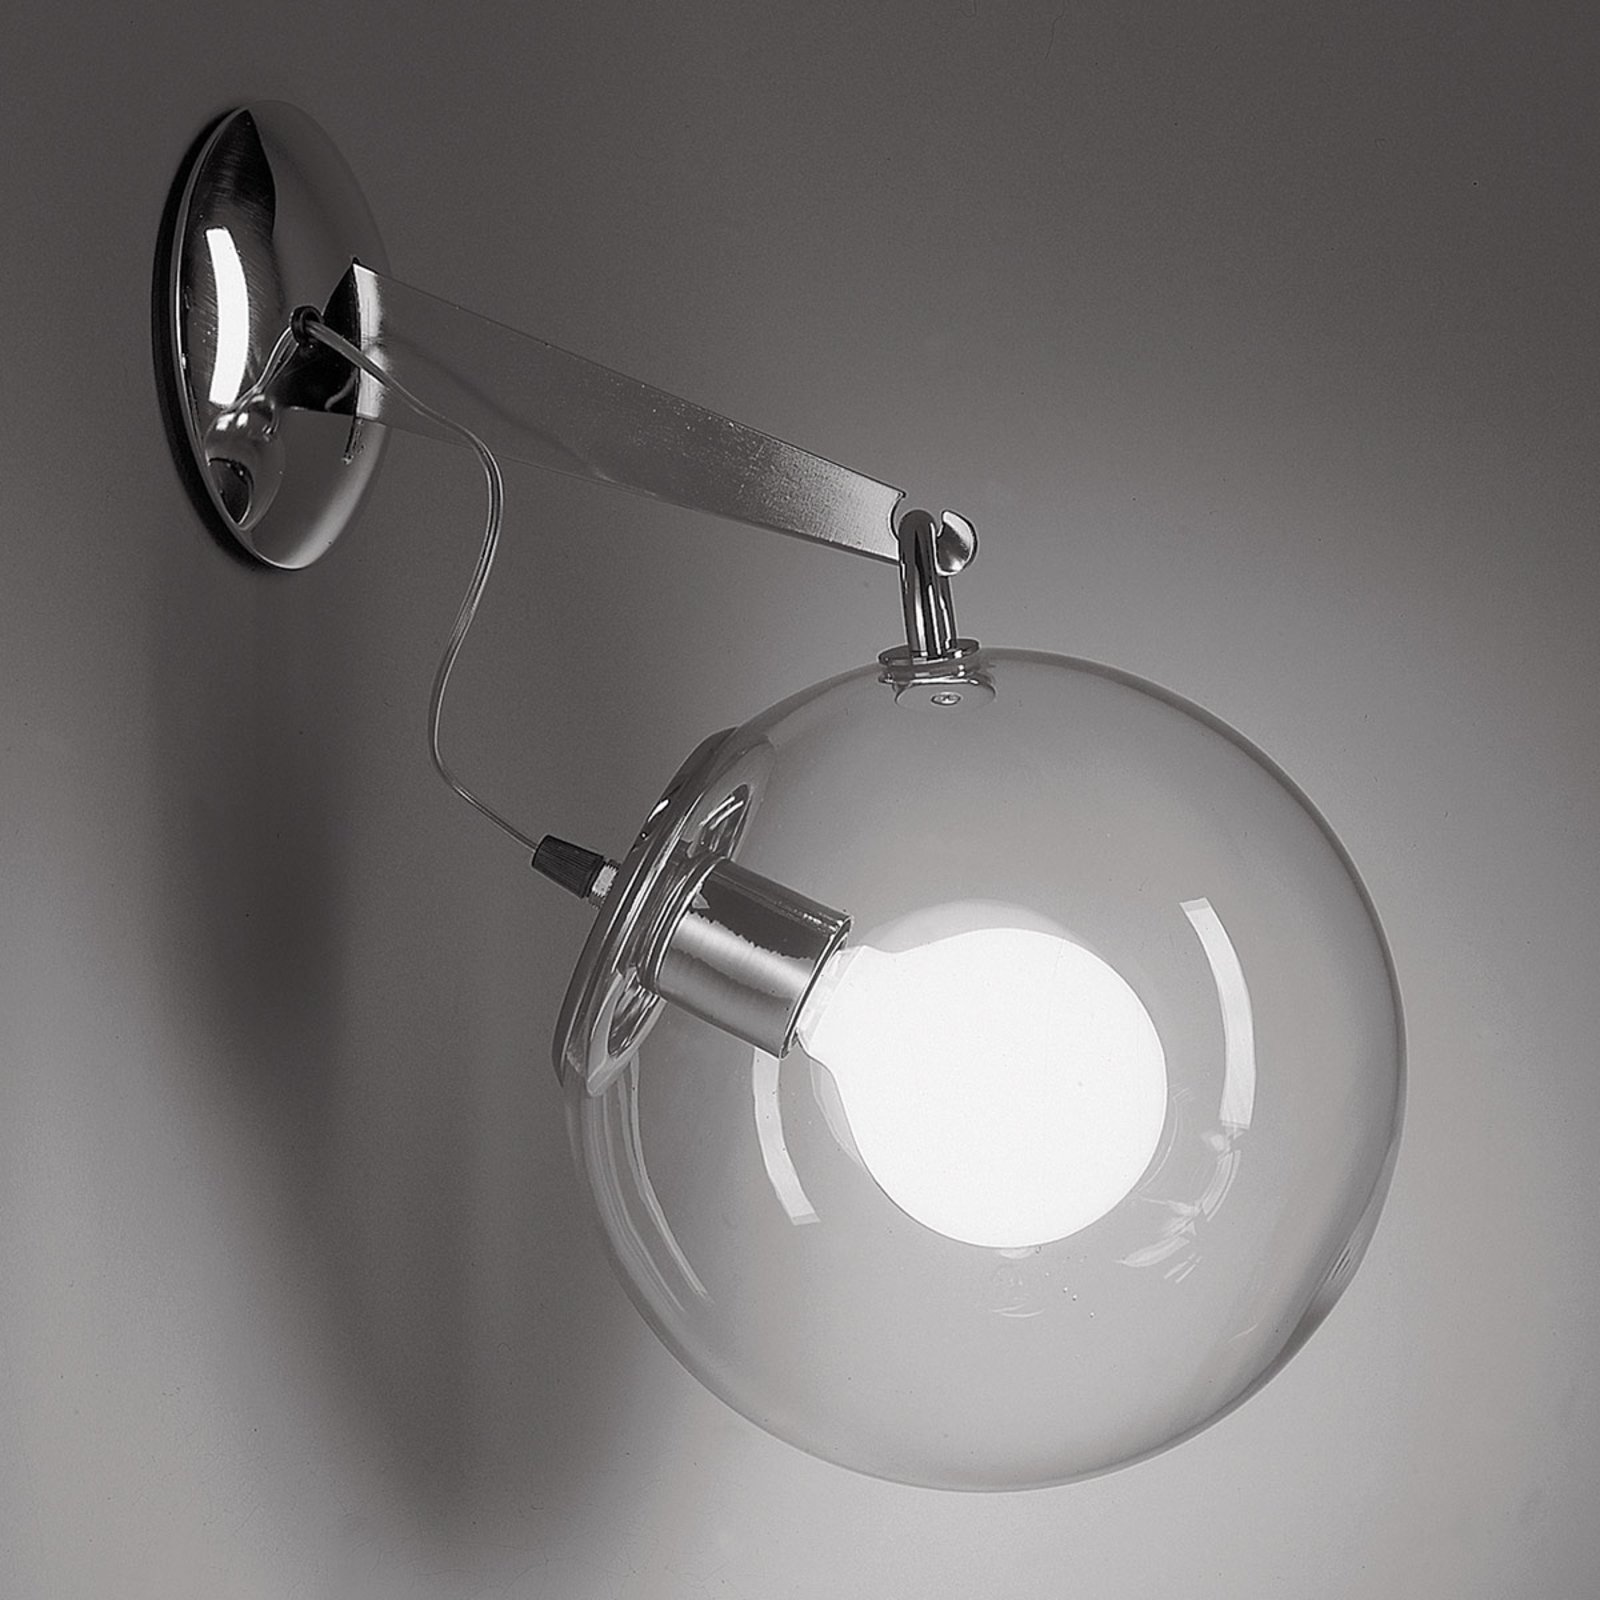 Artemide Miconos glazen wandlamp in chroom